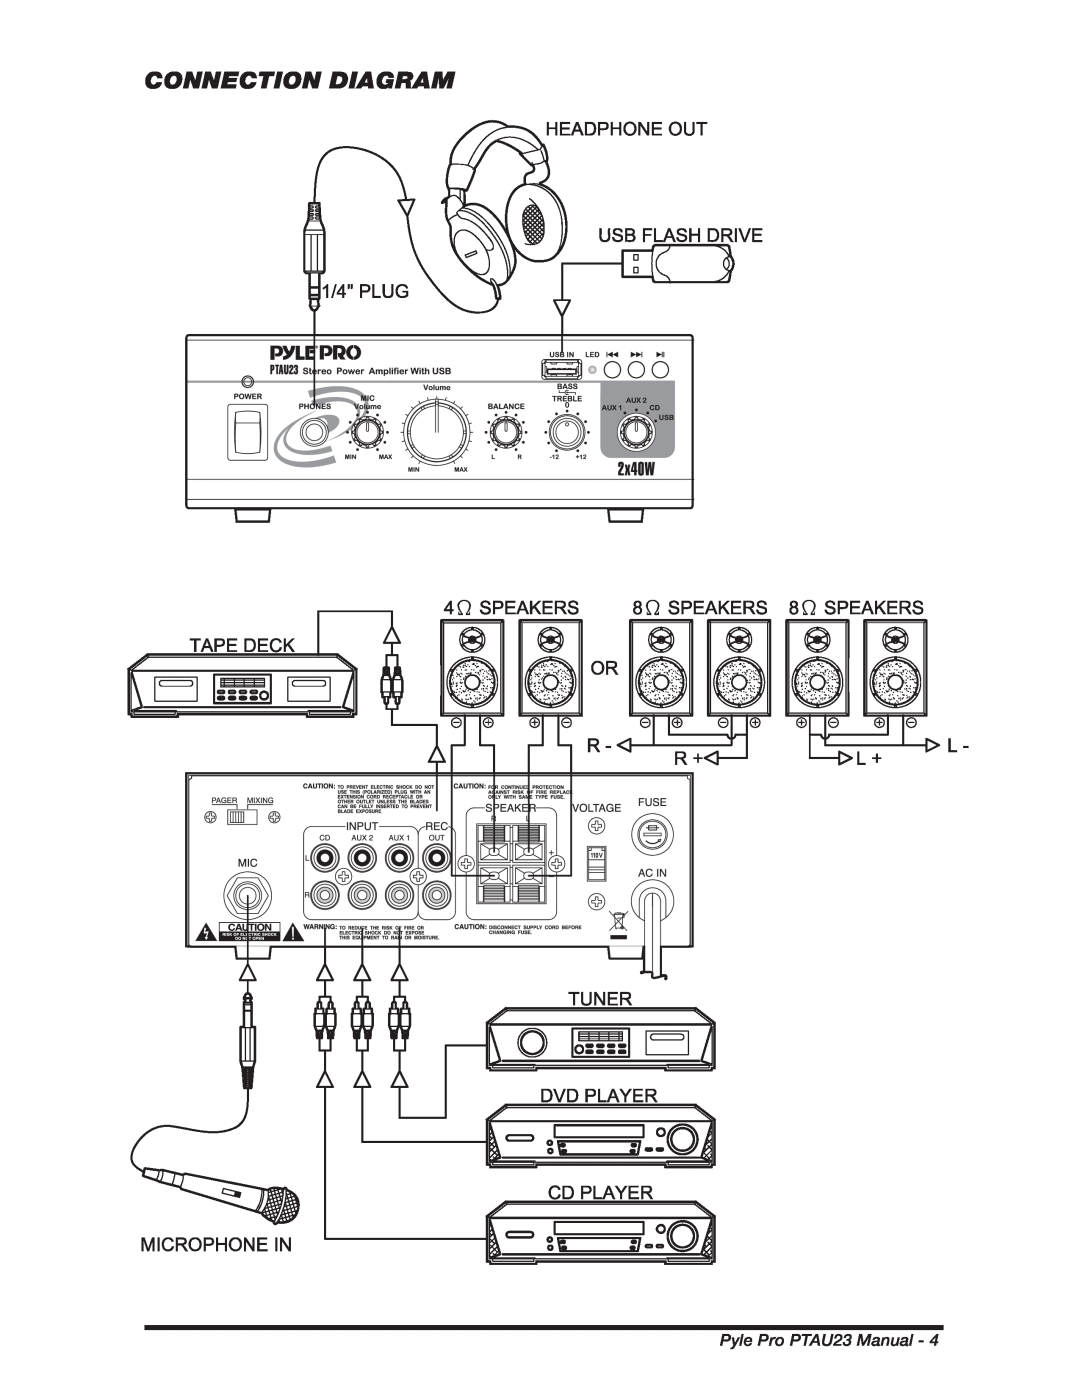 PYLE Audio manual Connection Diagram, Pyle Pro PTAU23 Manual 